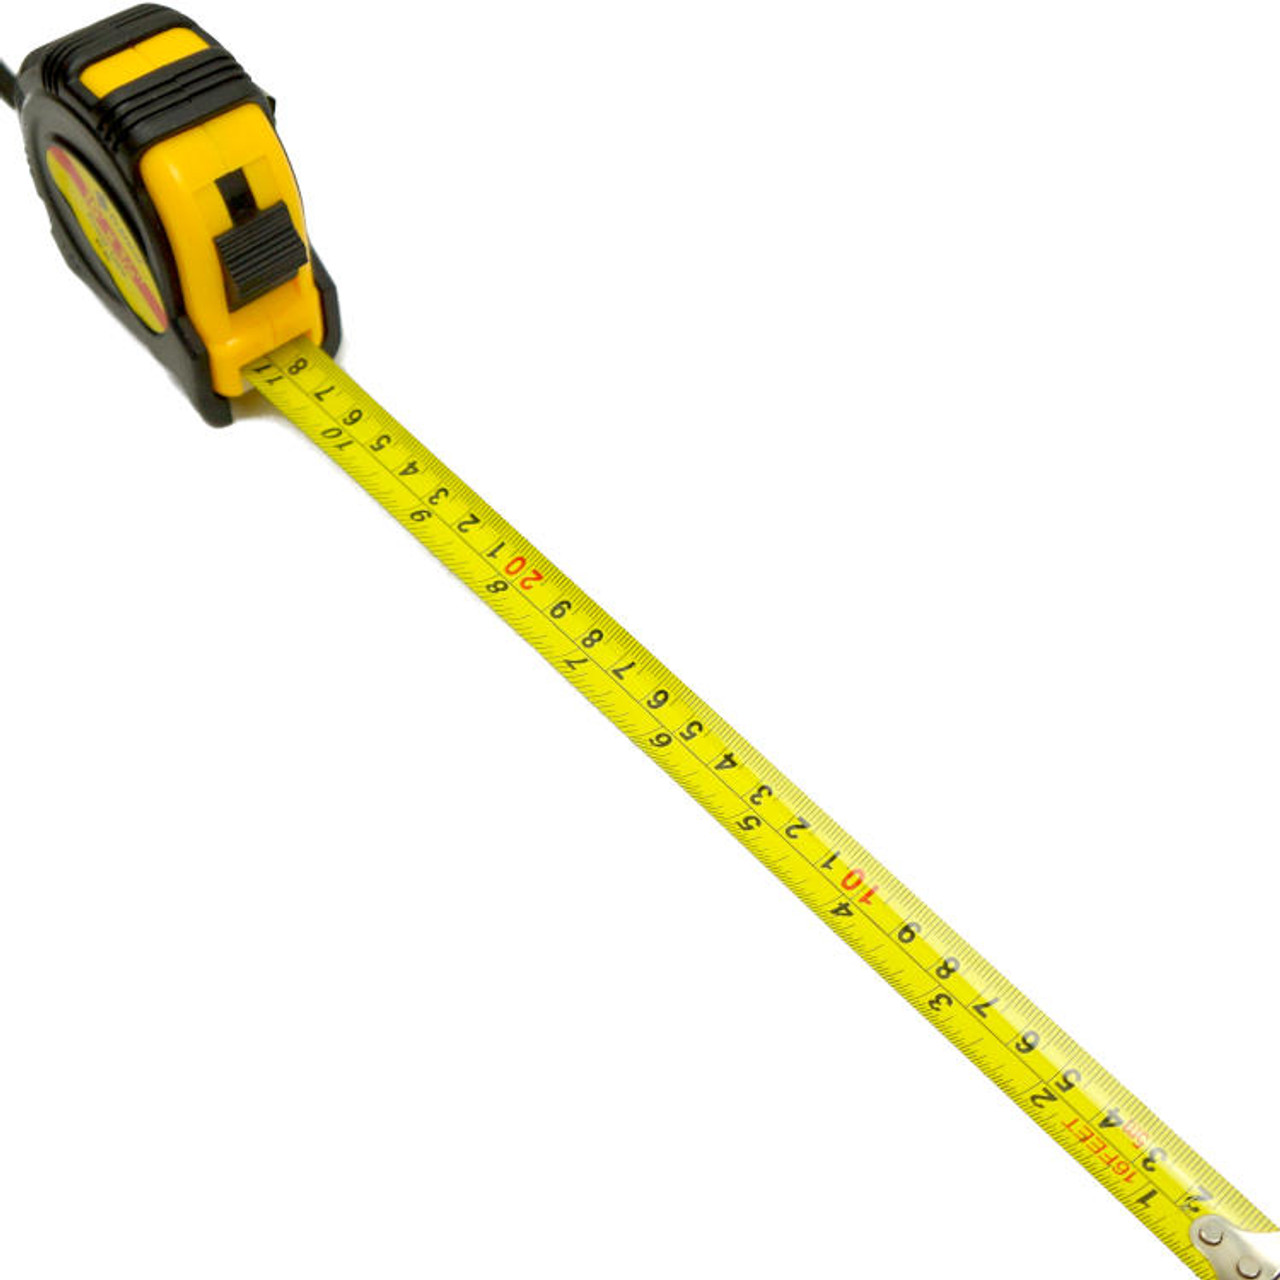 Cute design 3m yellow-orange tape measure/measuring tape